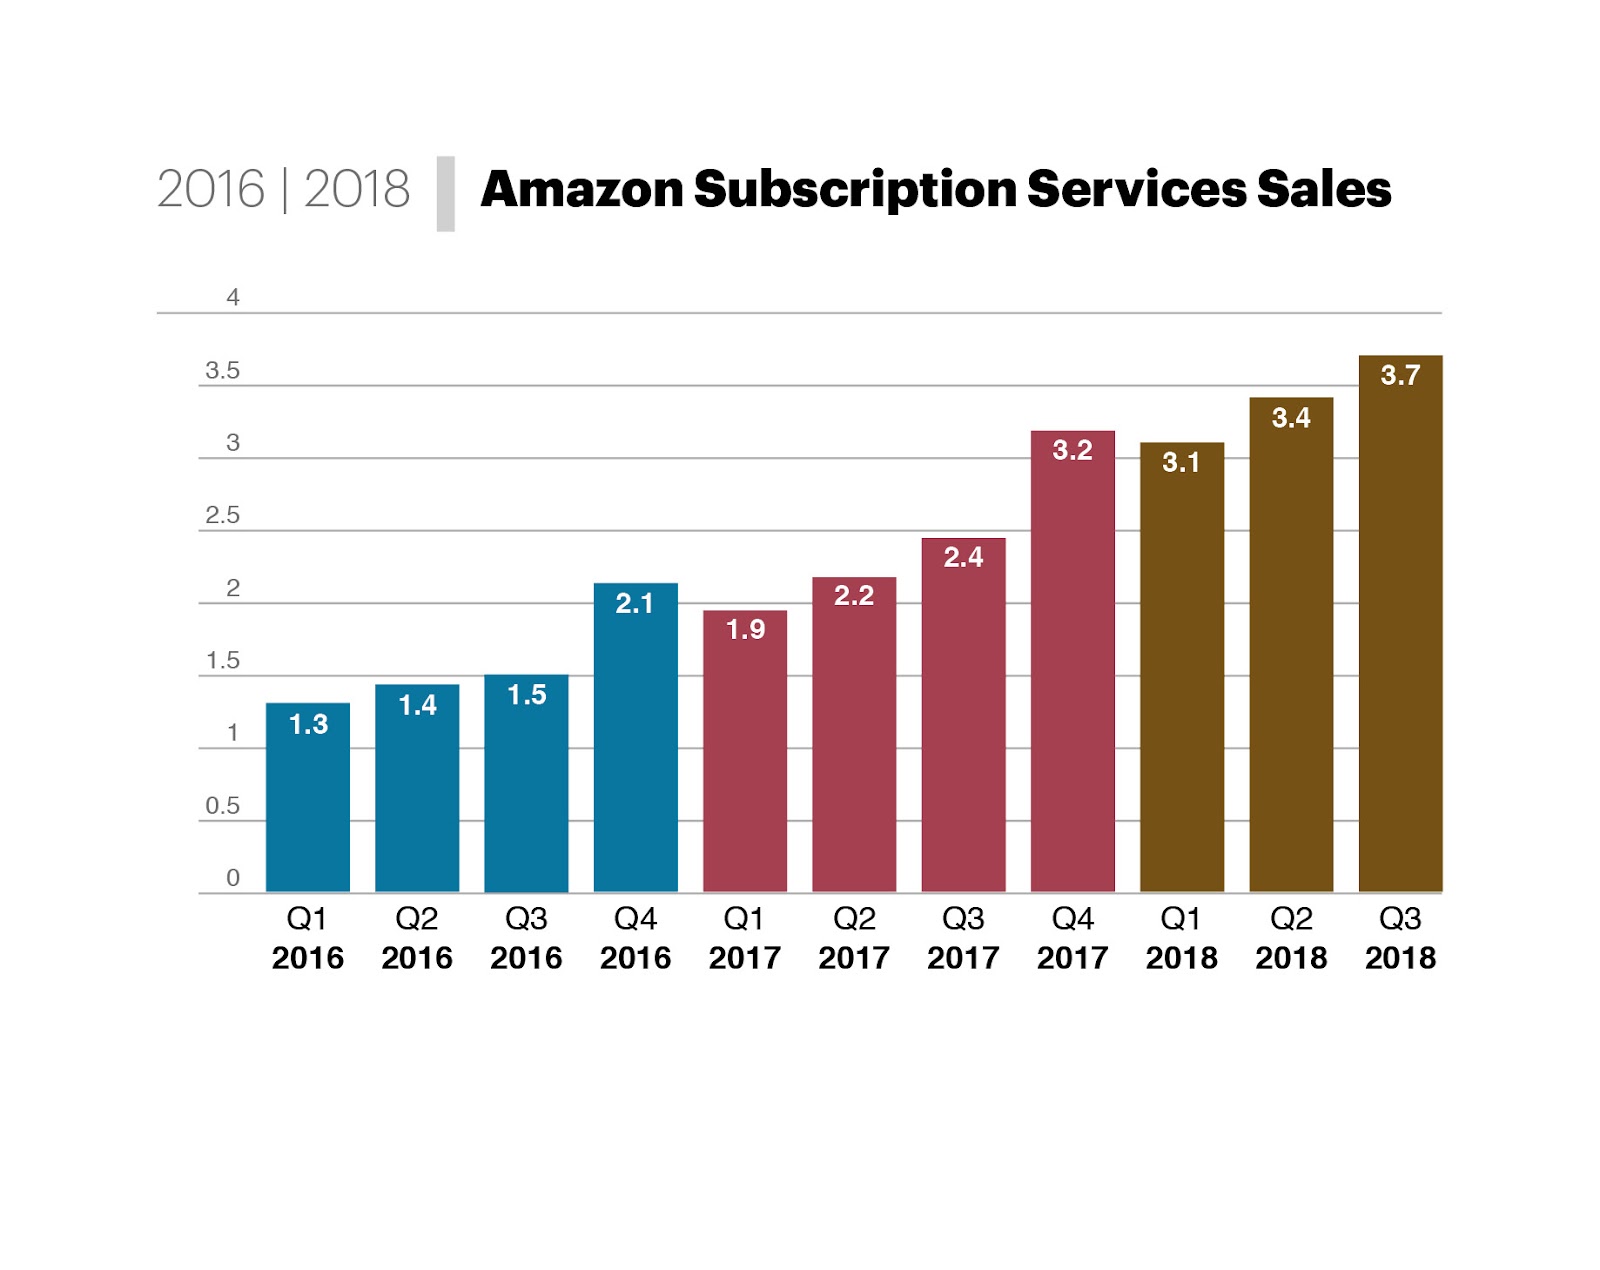 Amazon Subscription Service Sales. From 1.3 billion in Q1 2016 to 3.7 billion in Q3 2018.